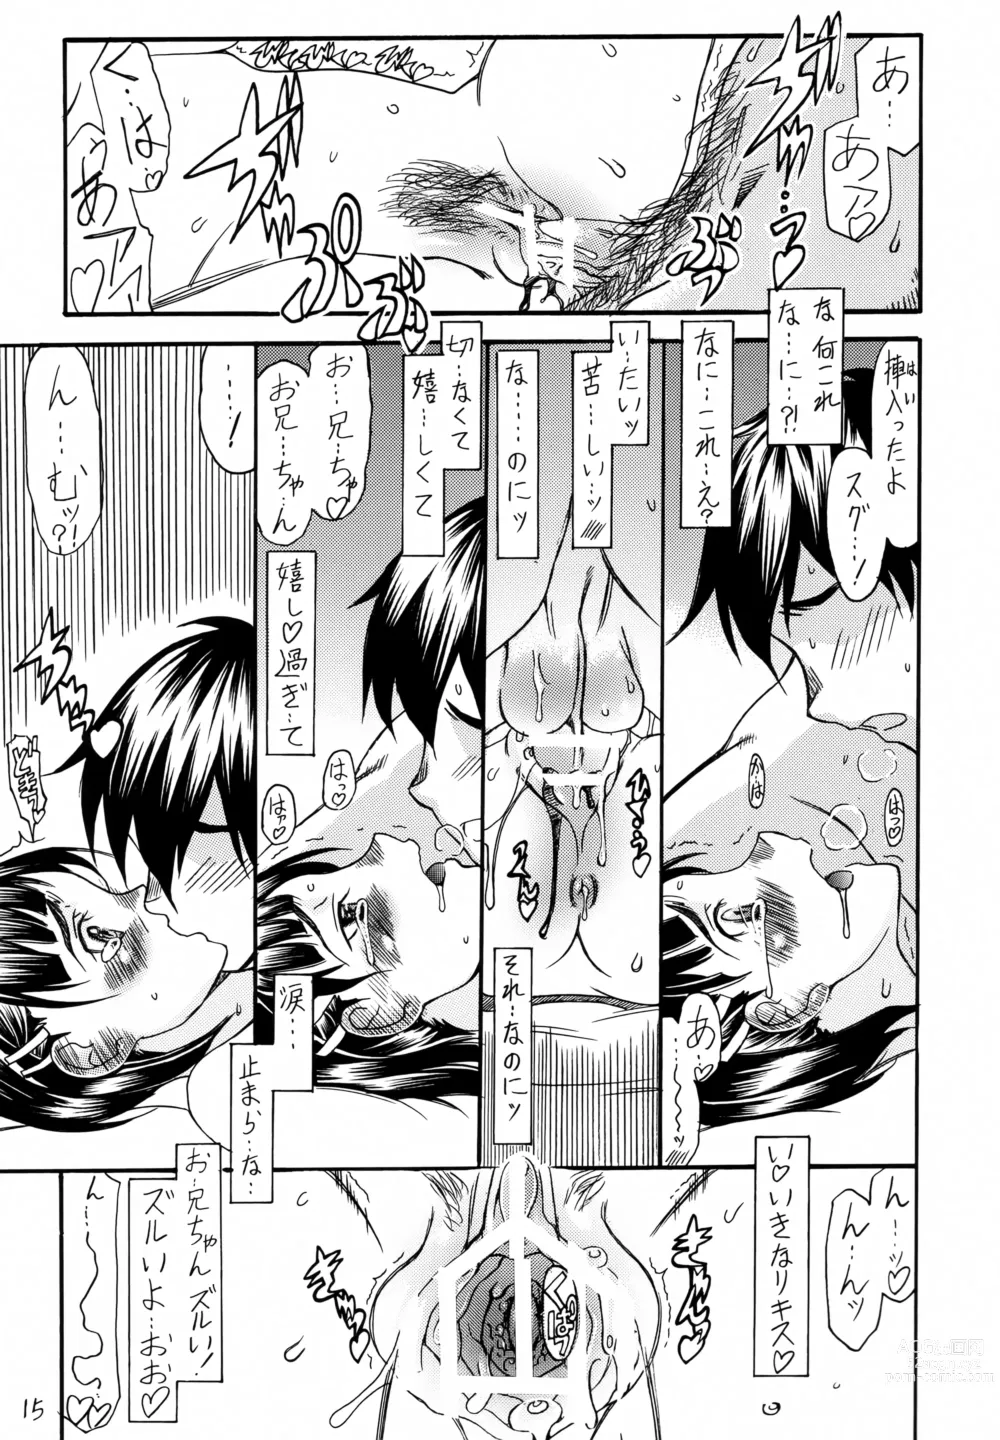 Page 14 of doujinshi SUGU PLUS